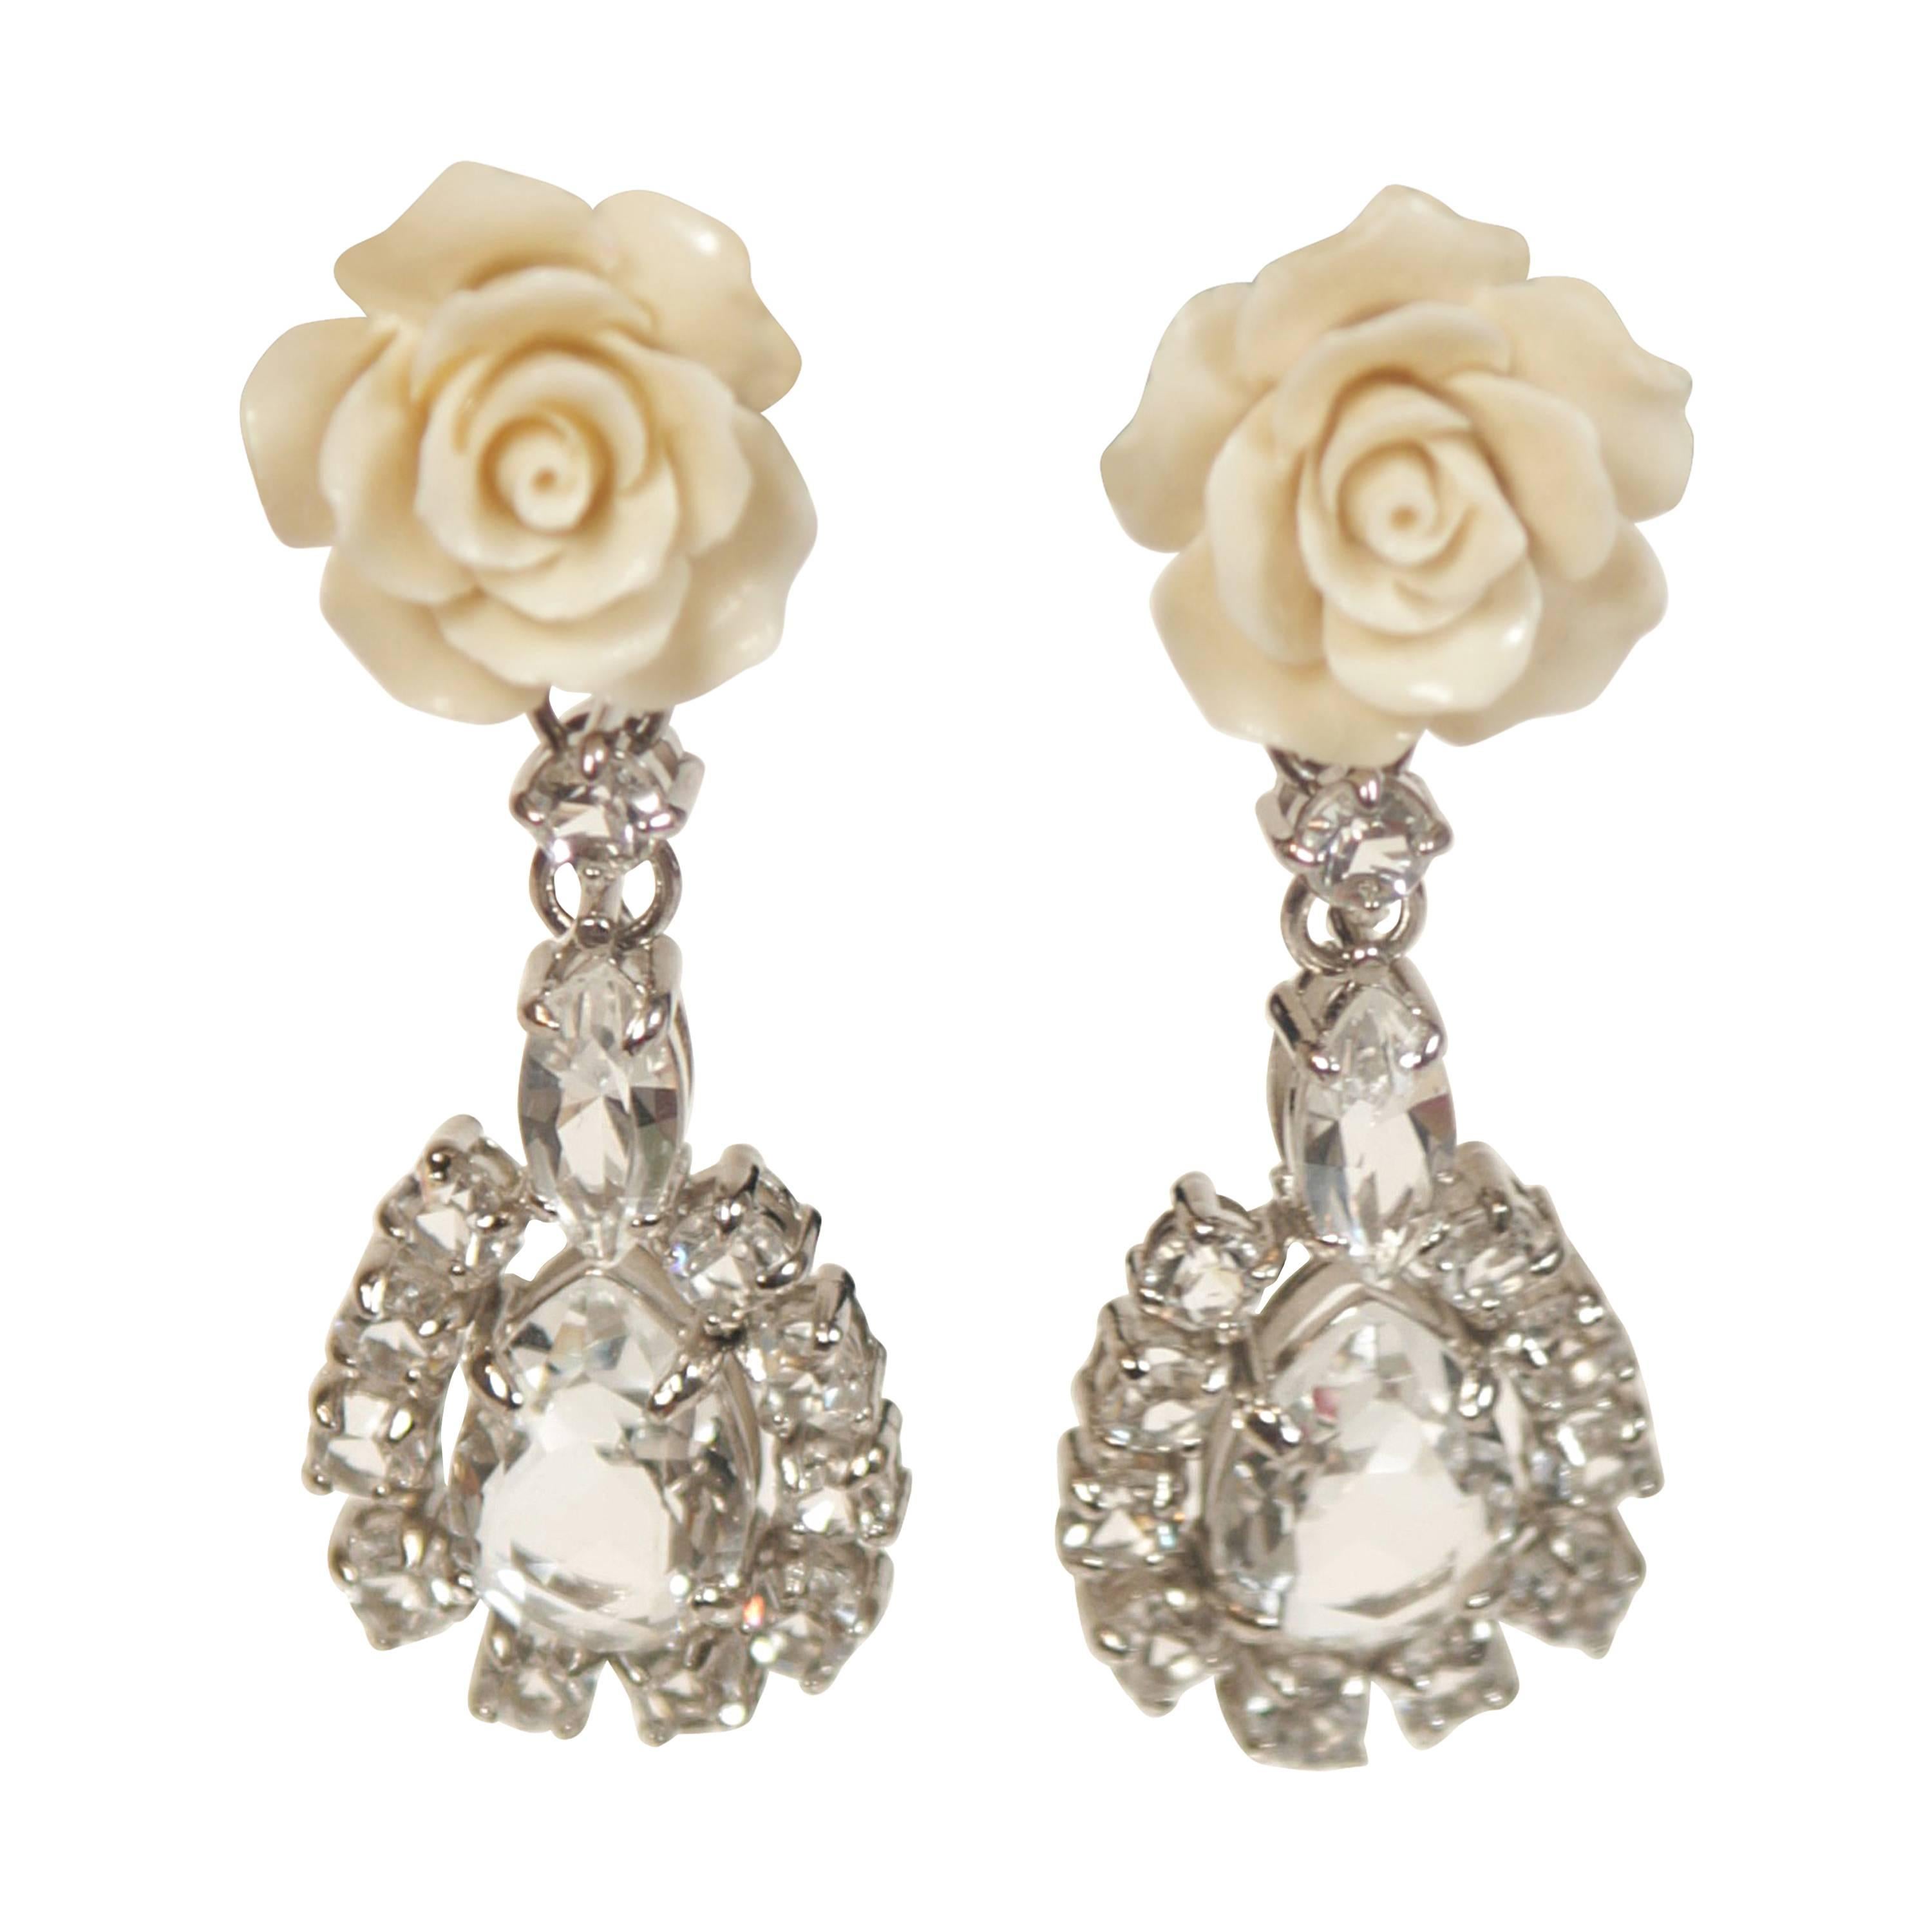 PRADA Large Rhinestone Clip On Earrings with Cream Rose Detail